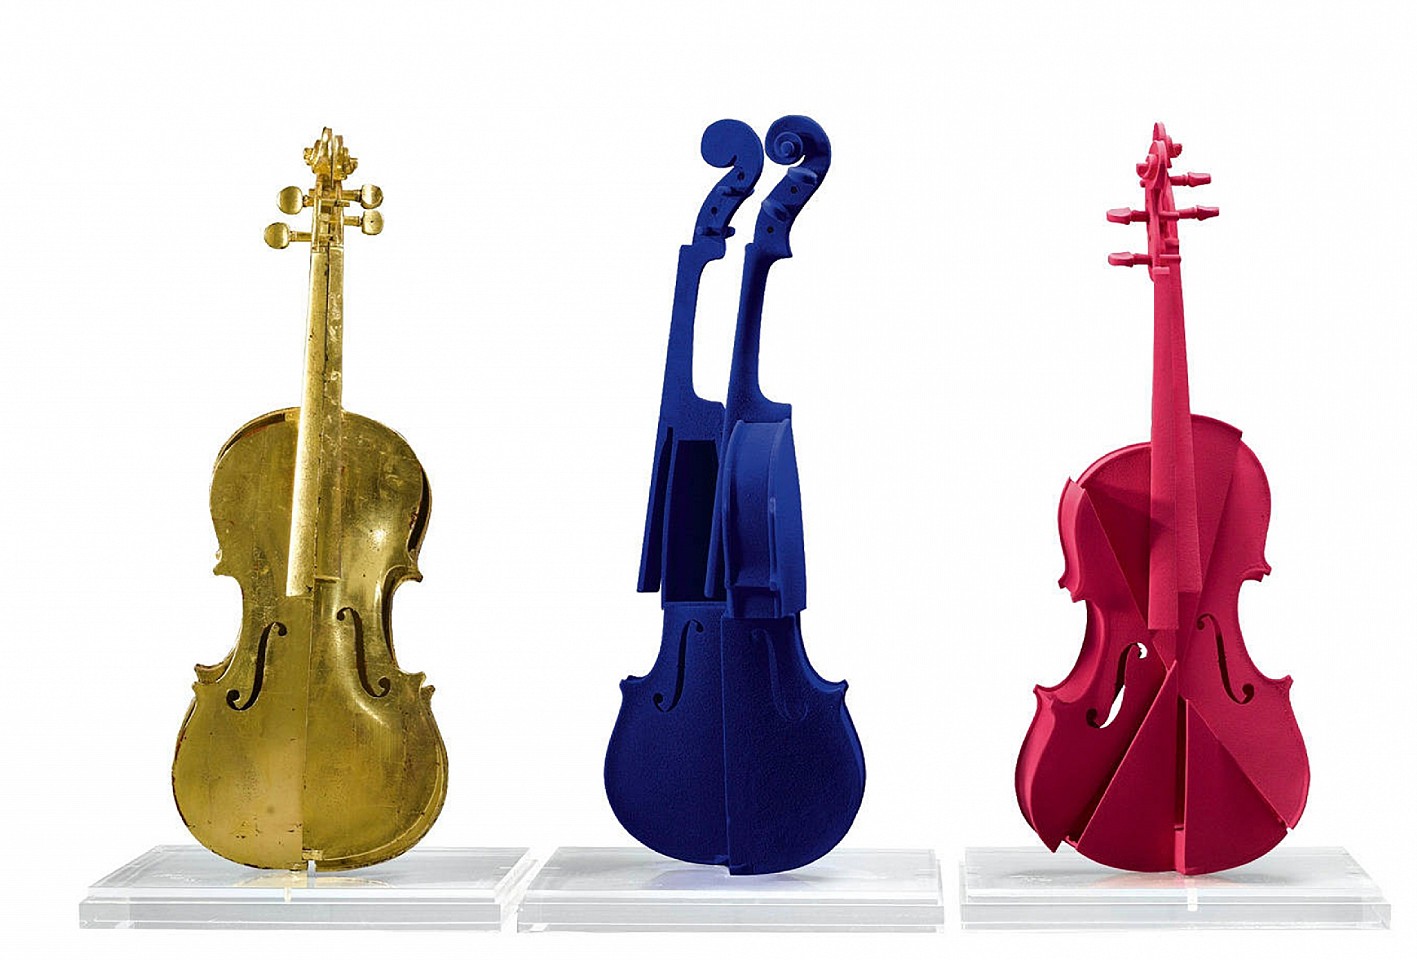 Arman, Hommage à Yves Klein, 1992
pigment on three violins in Plexiglas cases, 26 x 12 5/8 x 8 1/2 in. (66 x 32.1 x 21.6 cm)
ARM180901